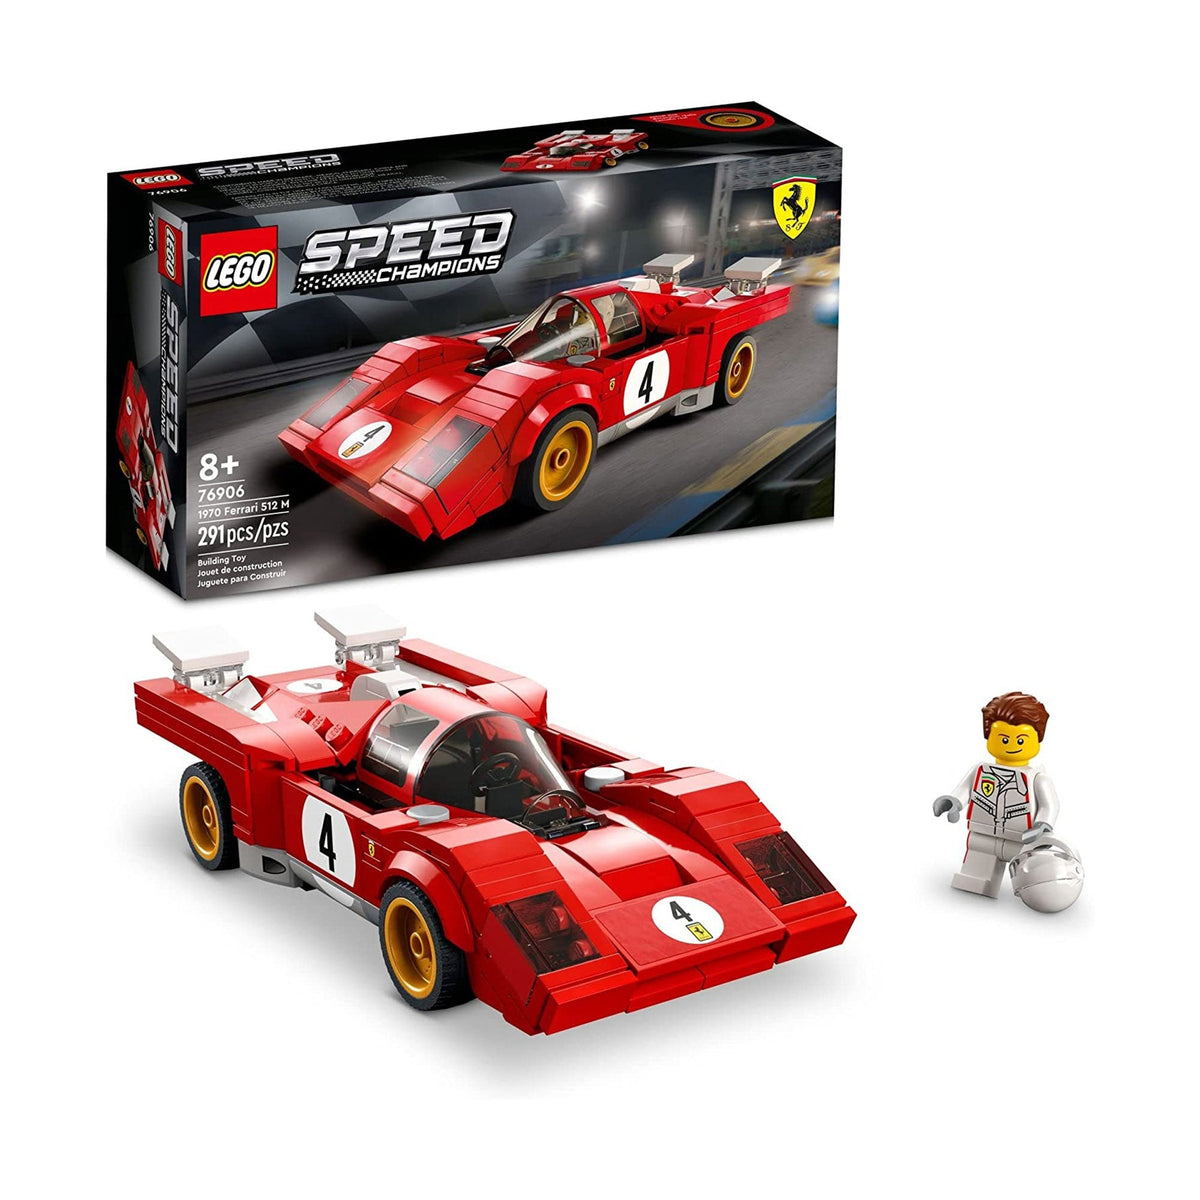 LEGO Toys & Games LEGO Speed Champions 1970 Ferrari 512, 76906, Ages 8+, 291 Pieces 673419353663